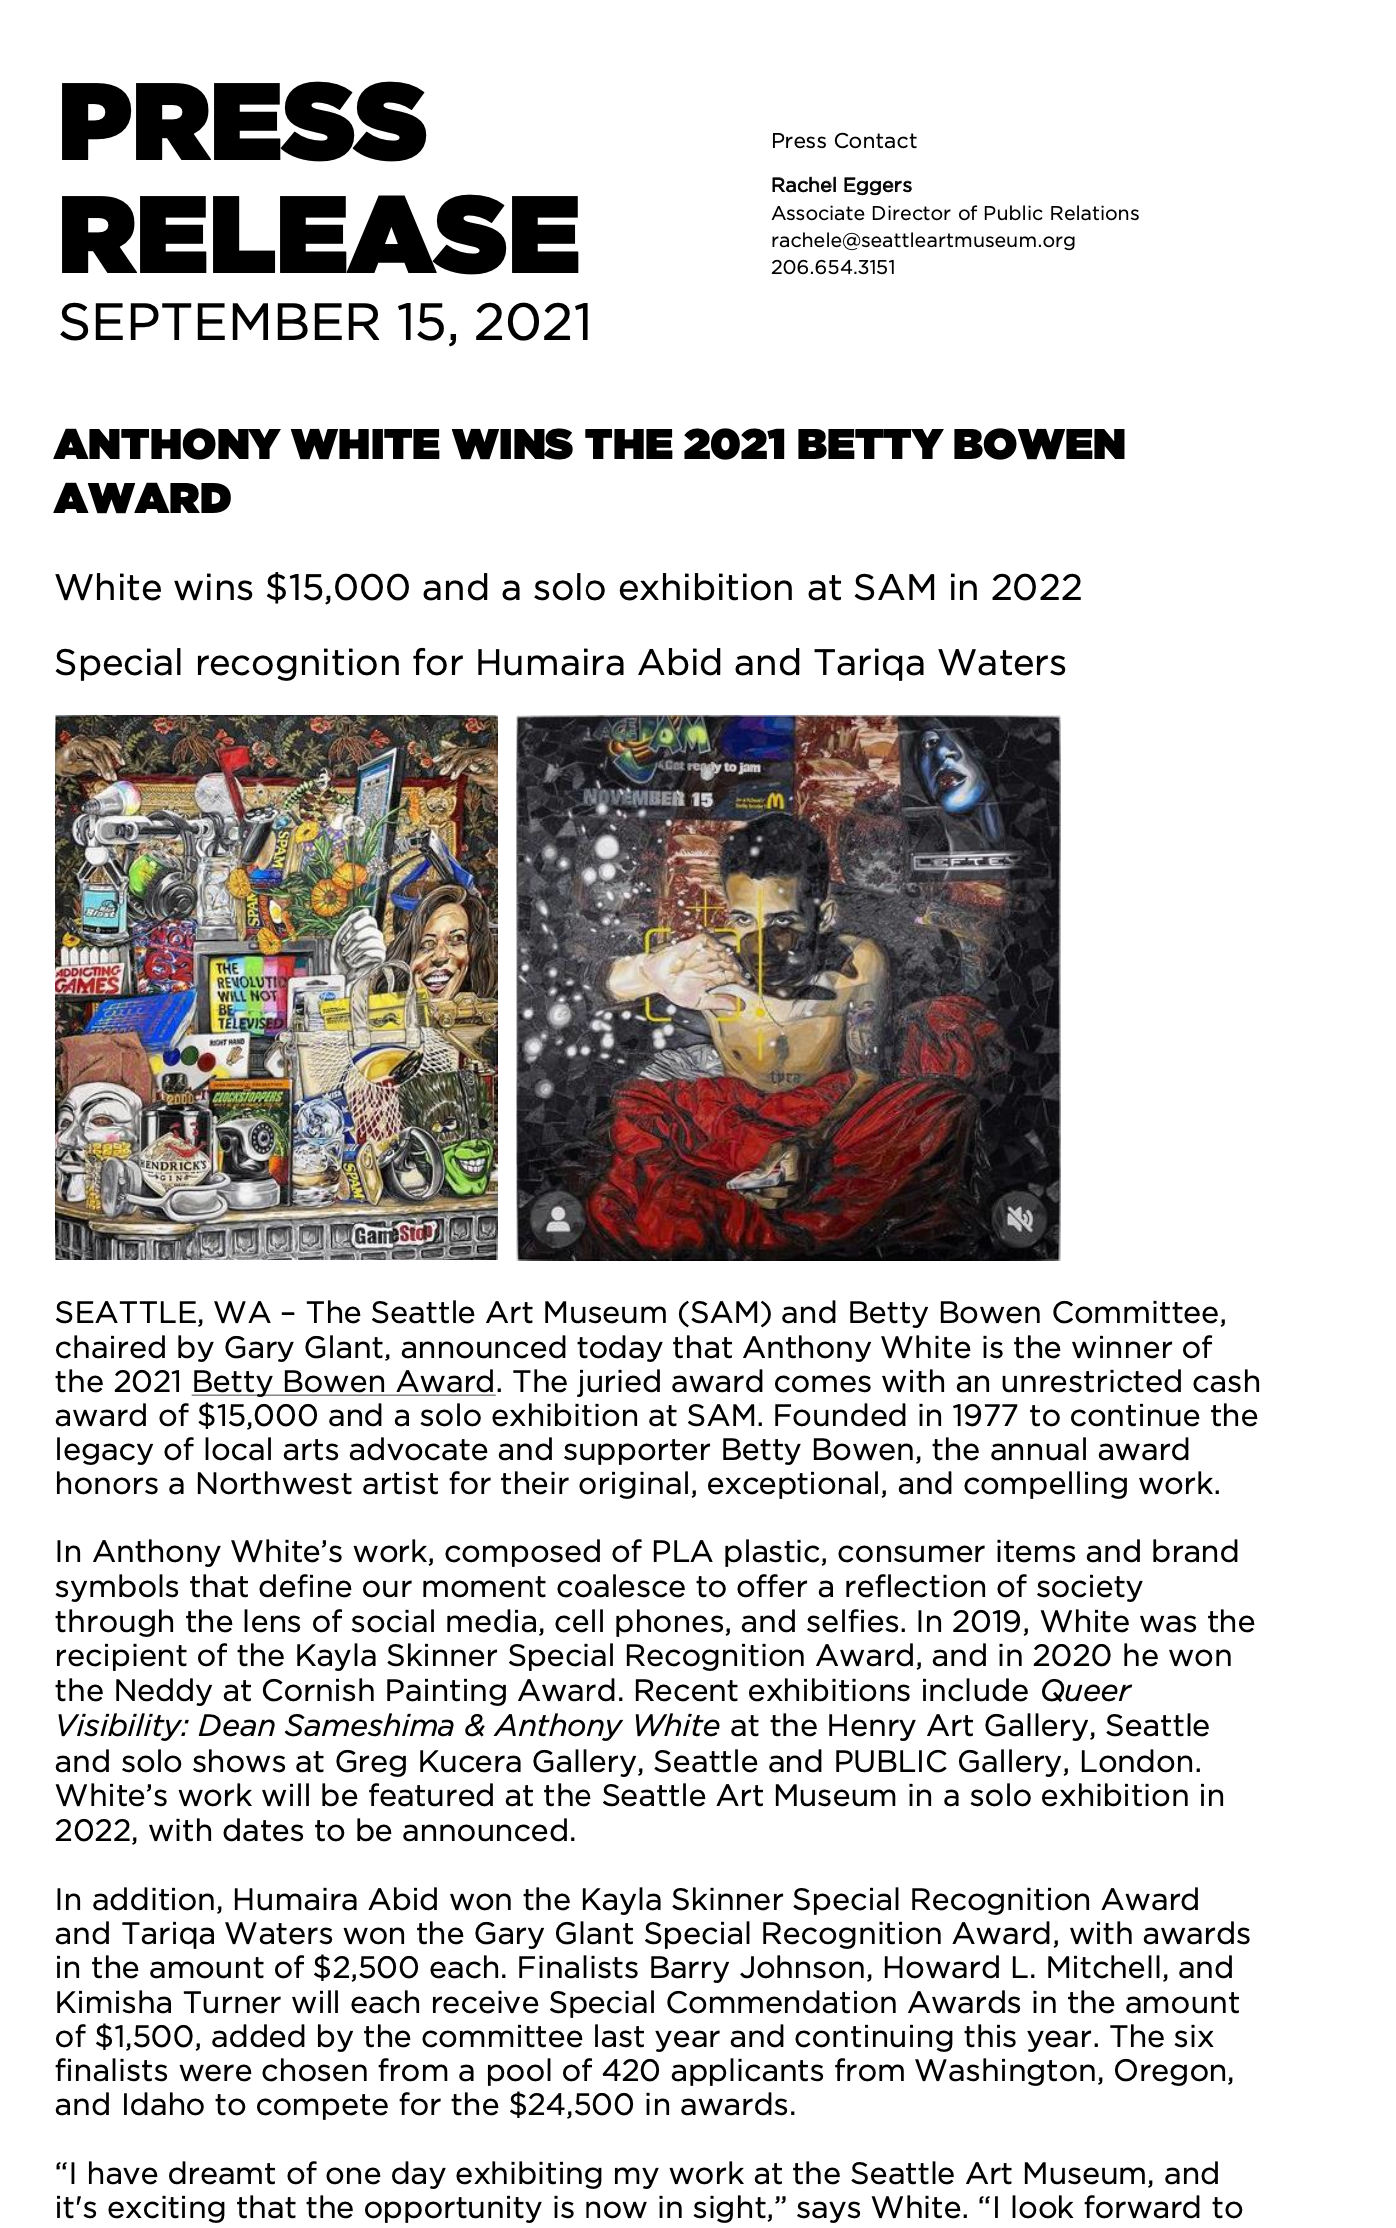 ANTHONY WHITE WINS THE 2021 BETTY BOWEN AWARD